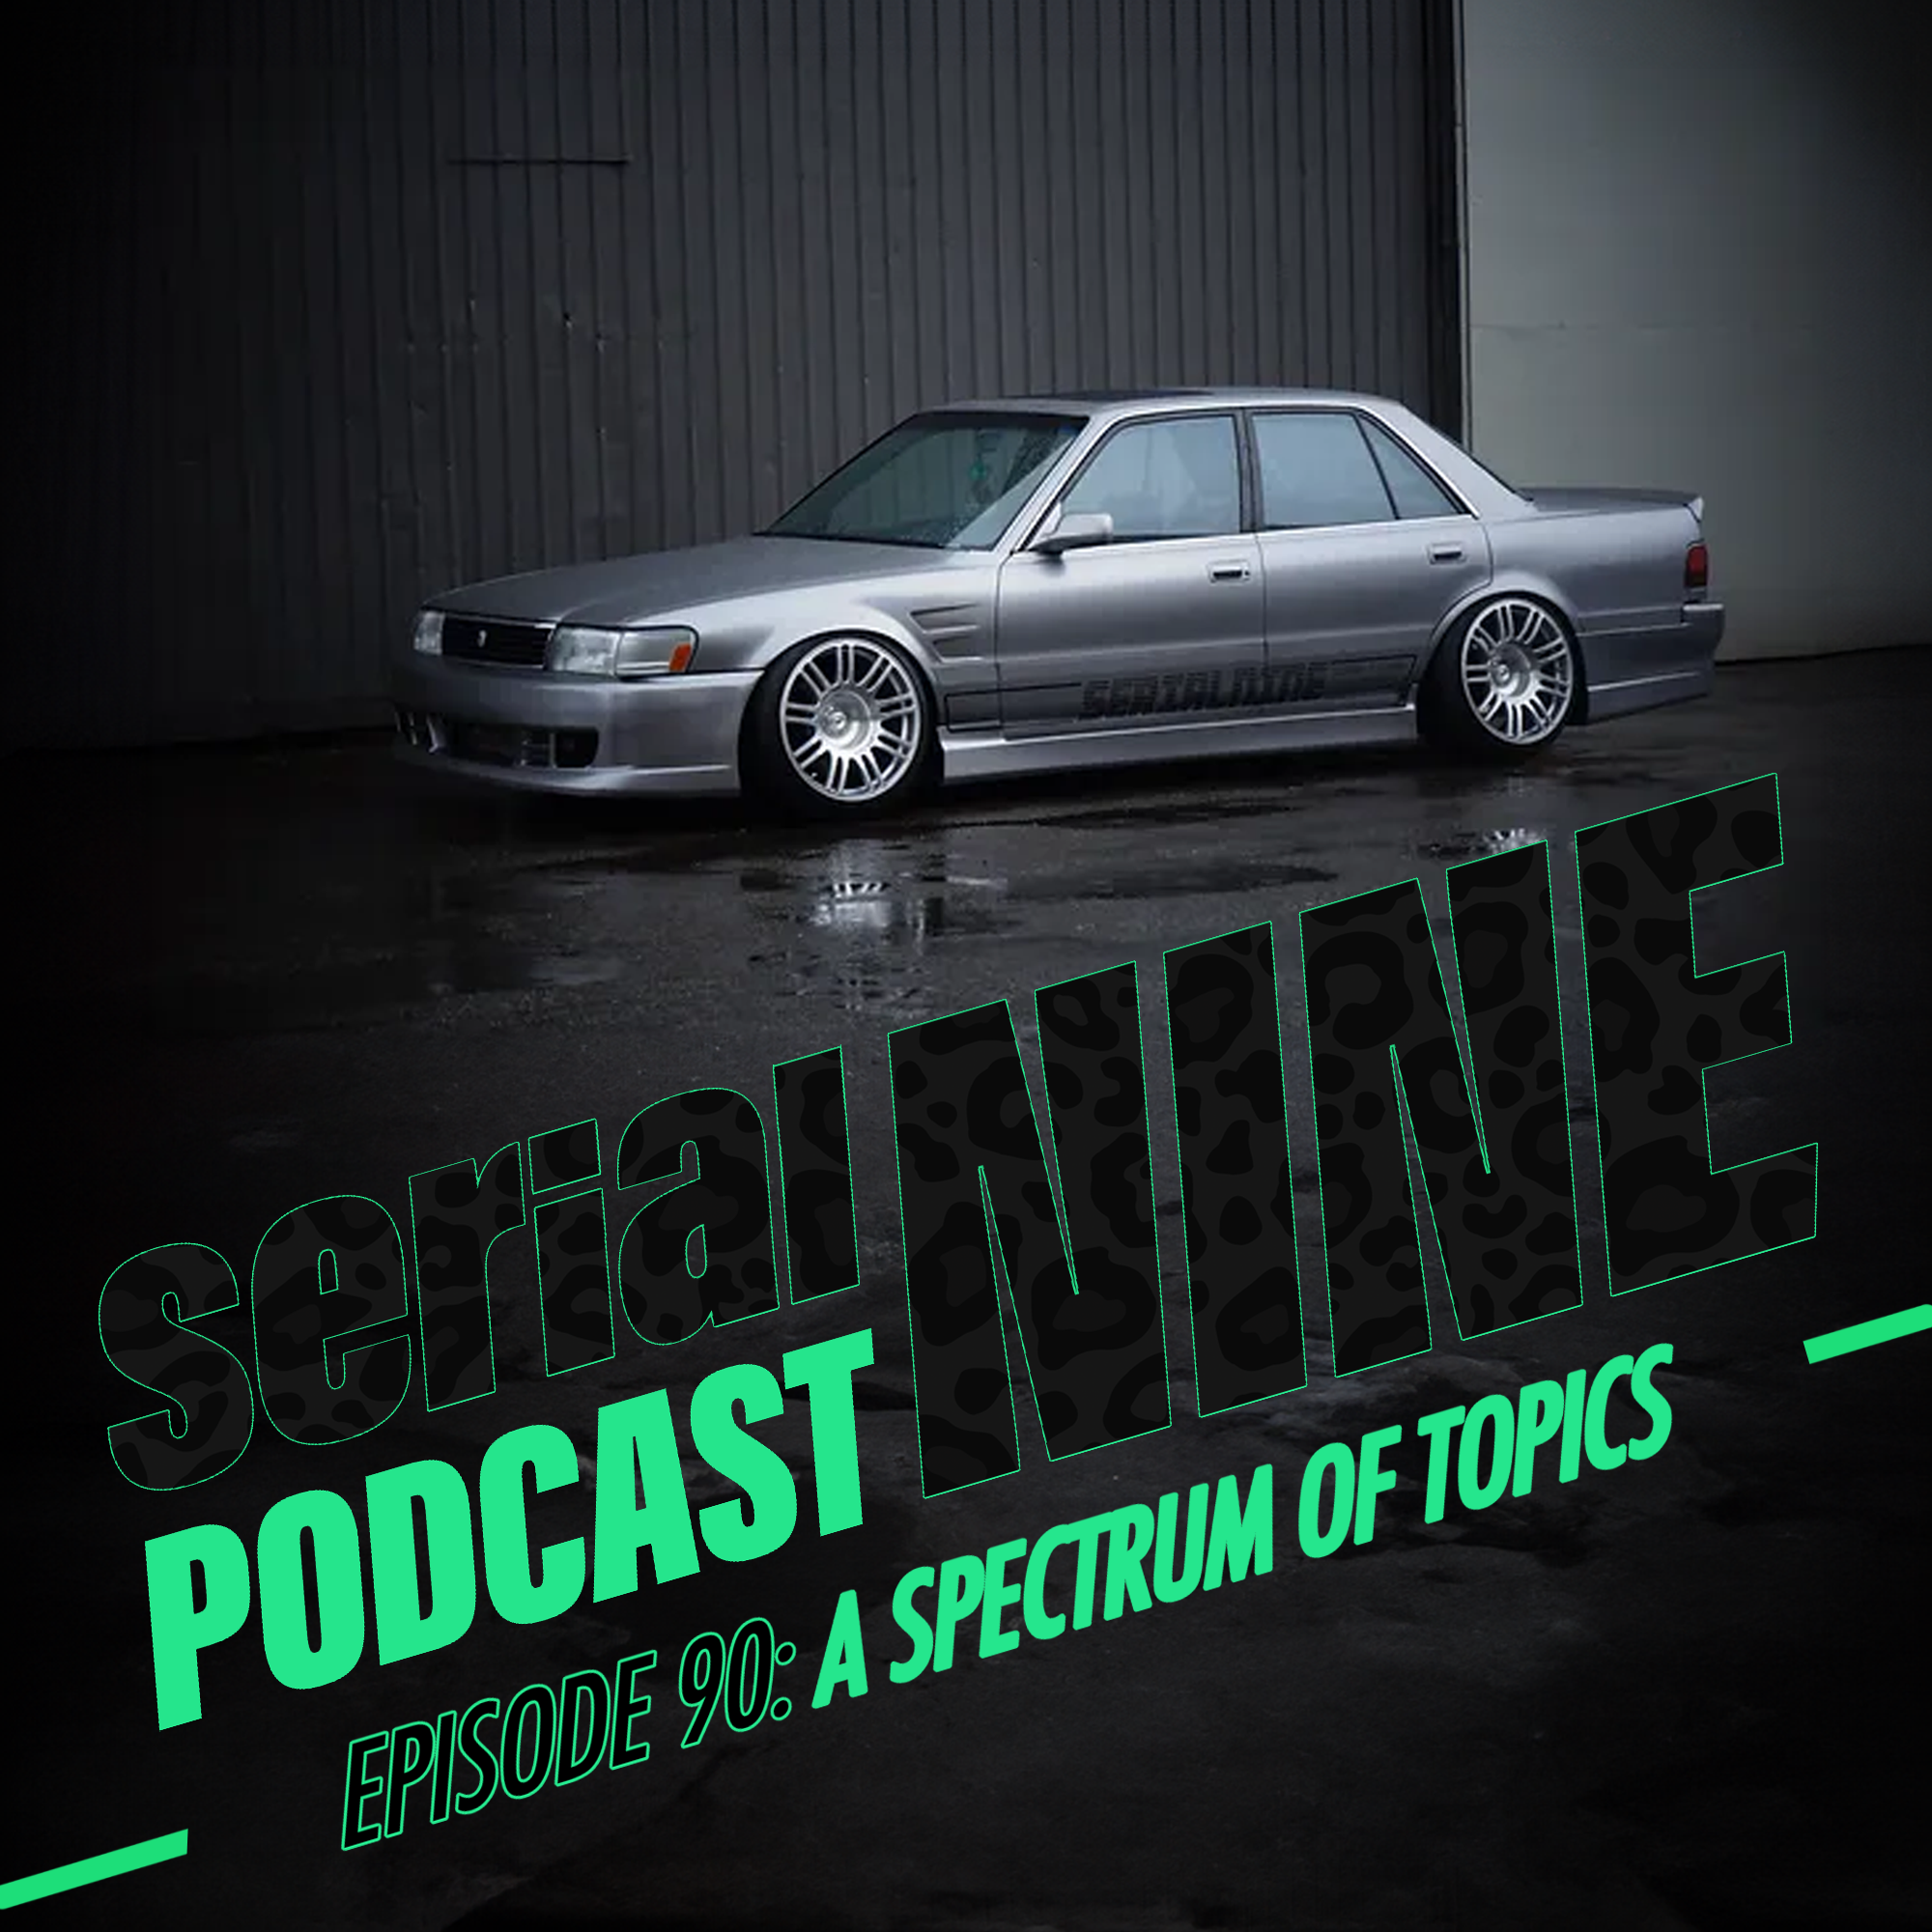 SerialPodcastNine Episode 90: A Spectrum of Topics